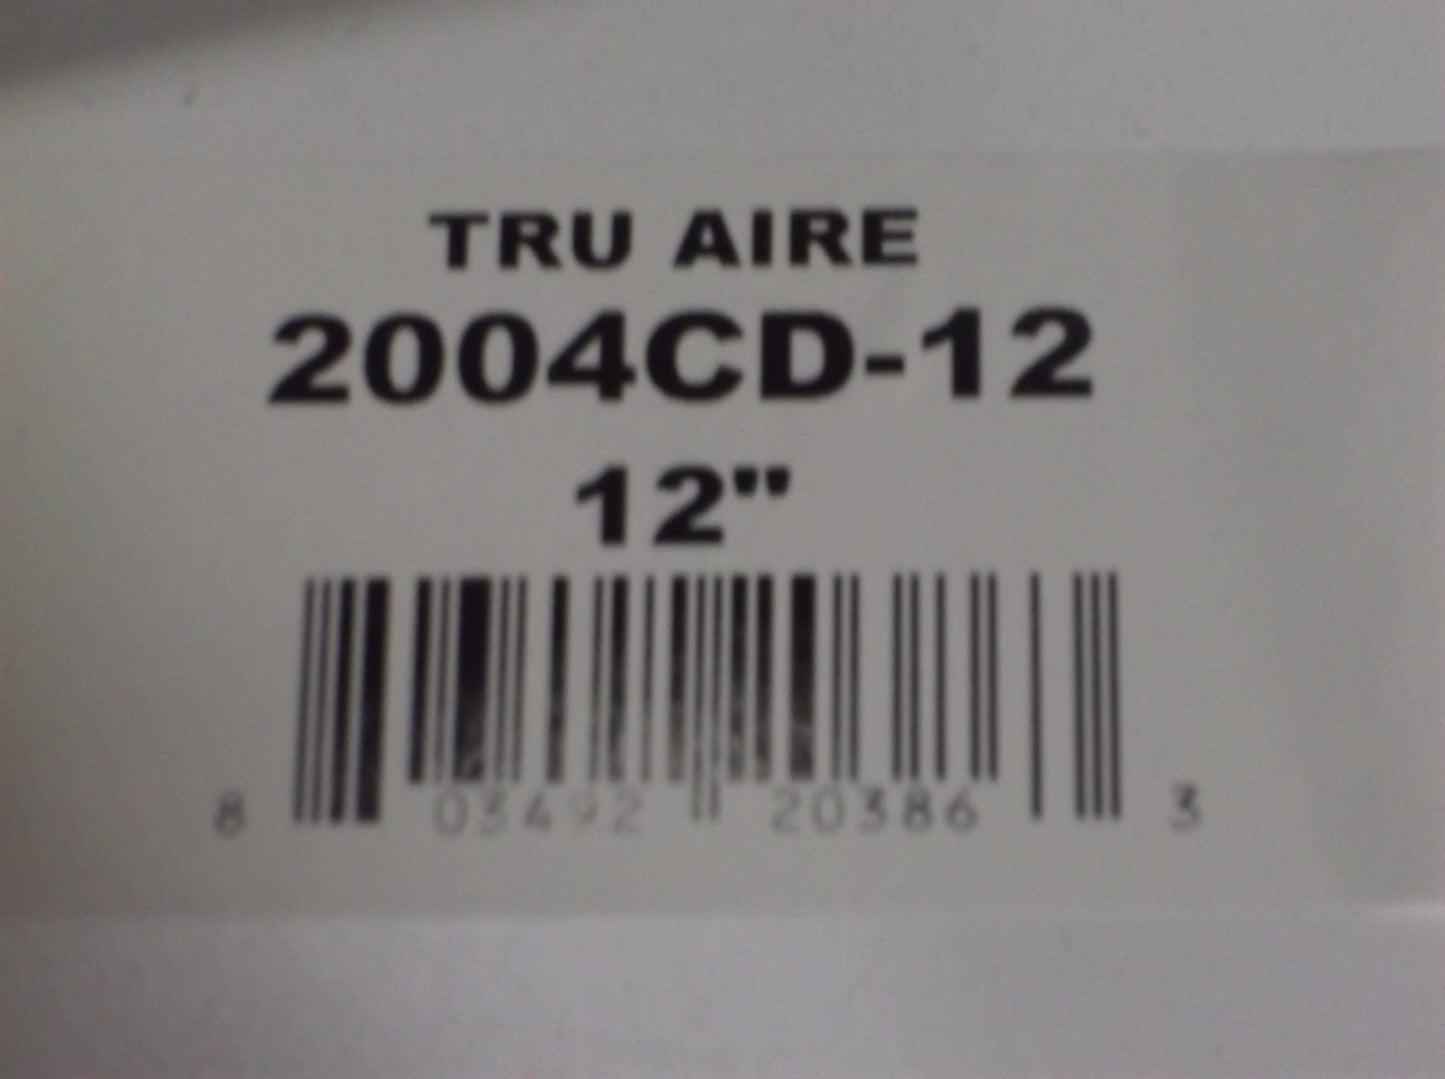 T-BAR 3 CONE 12"  ROUND 24" X 24" HIGH VELOCITY SUPPLY DIFFUSER, WHITE